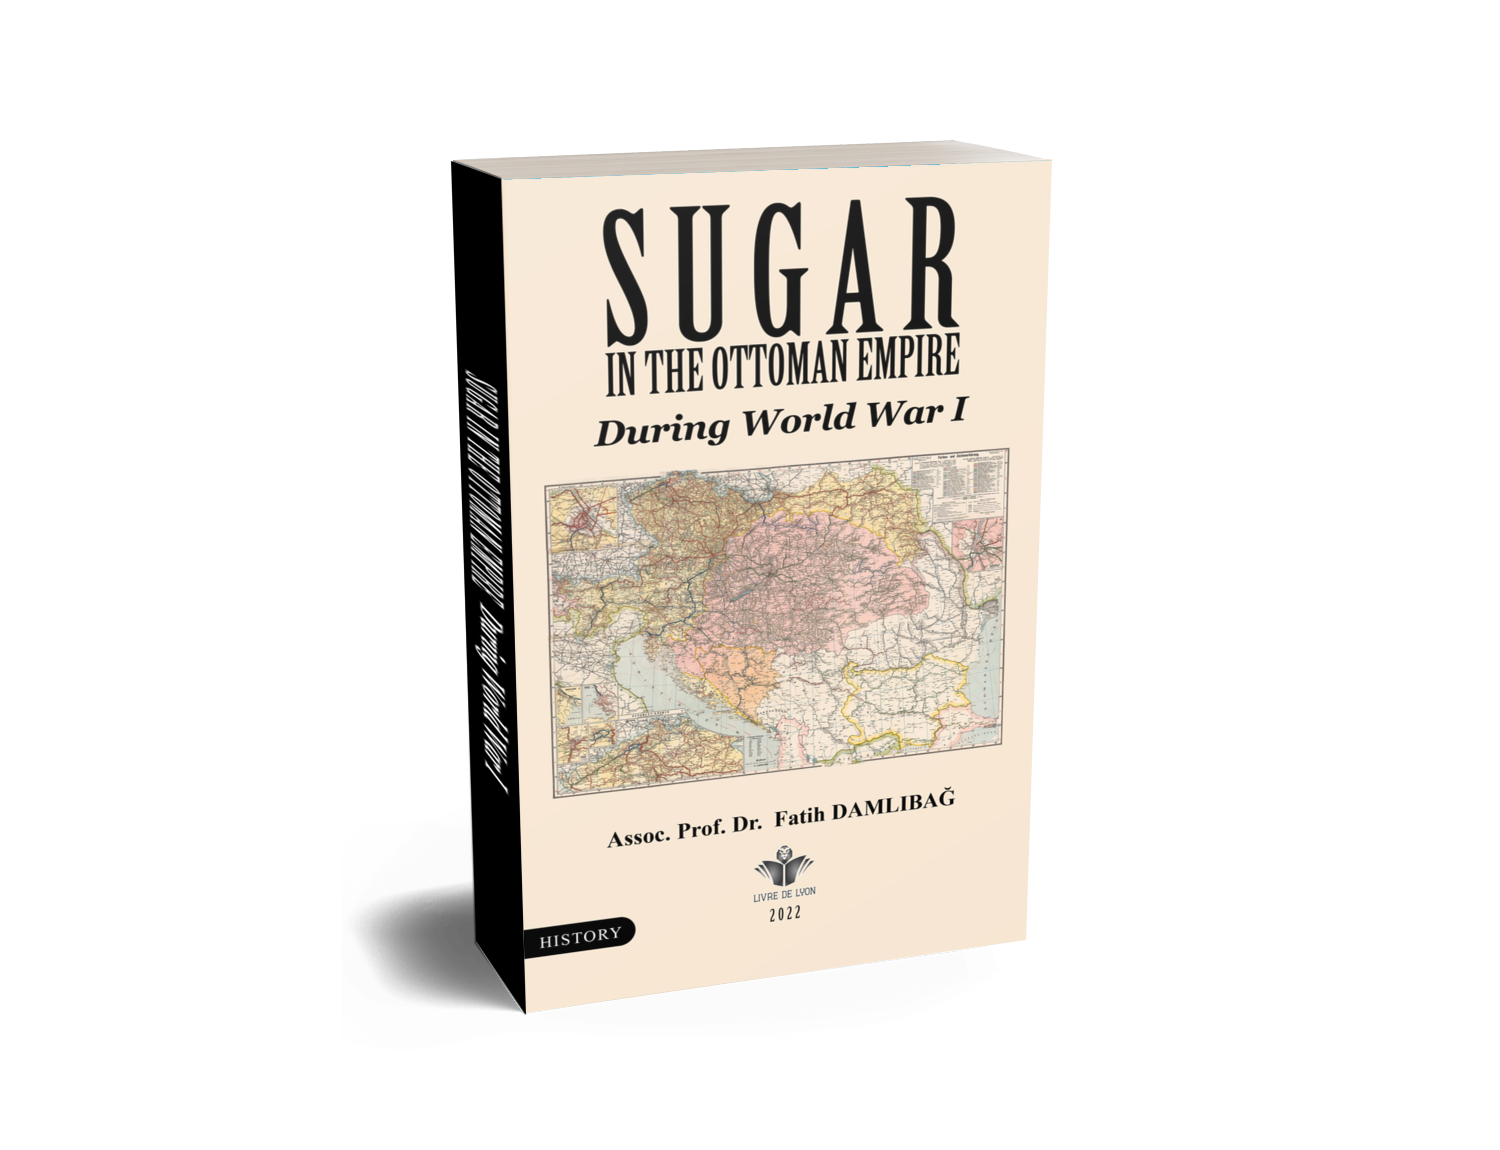 Sugar in The Ottoman Empire During World War I